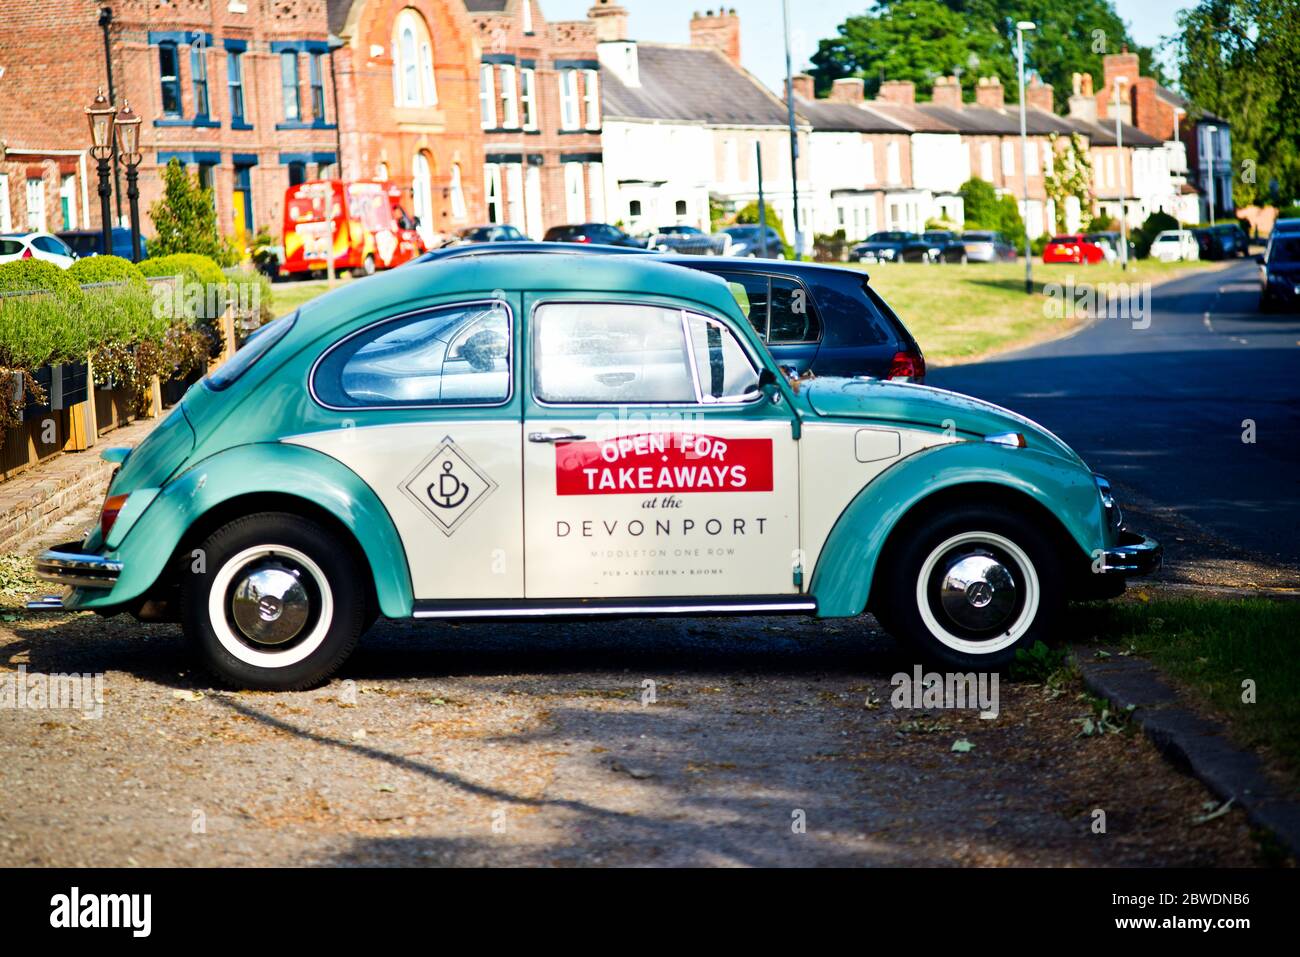 Volkswagen Beetle advertising open for takeaways for the Devonport, Middleton on Row, Borough of Darlington, England Stock Photo